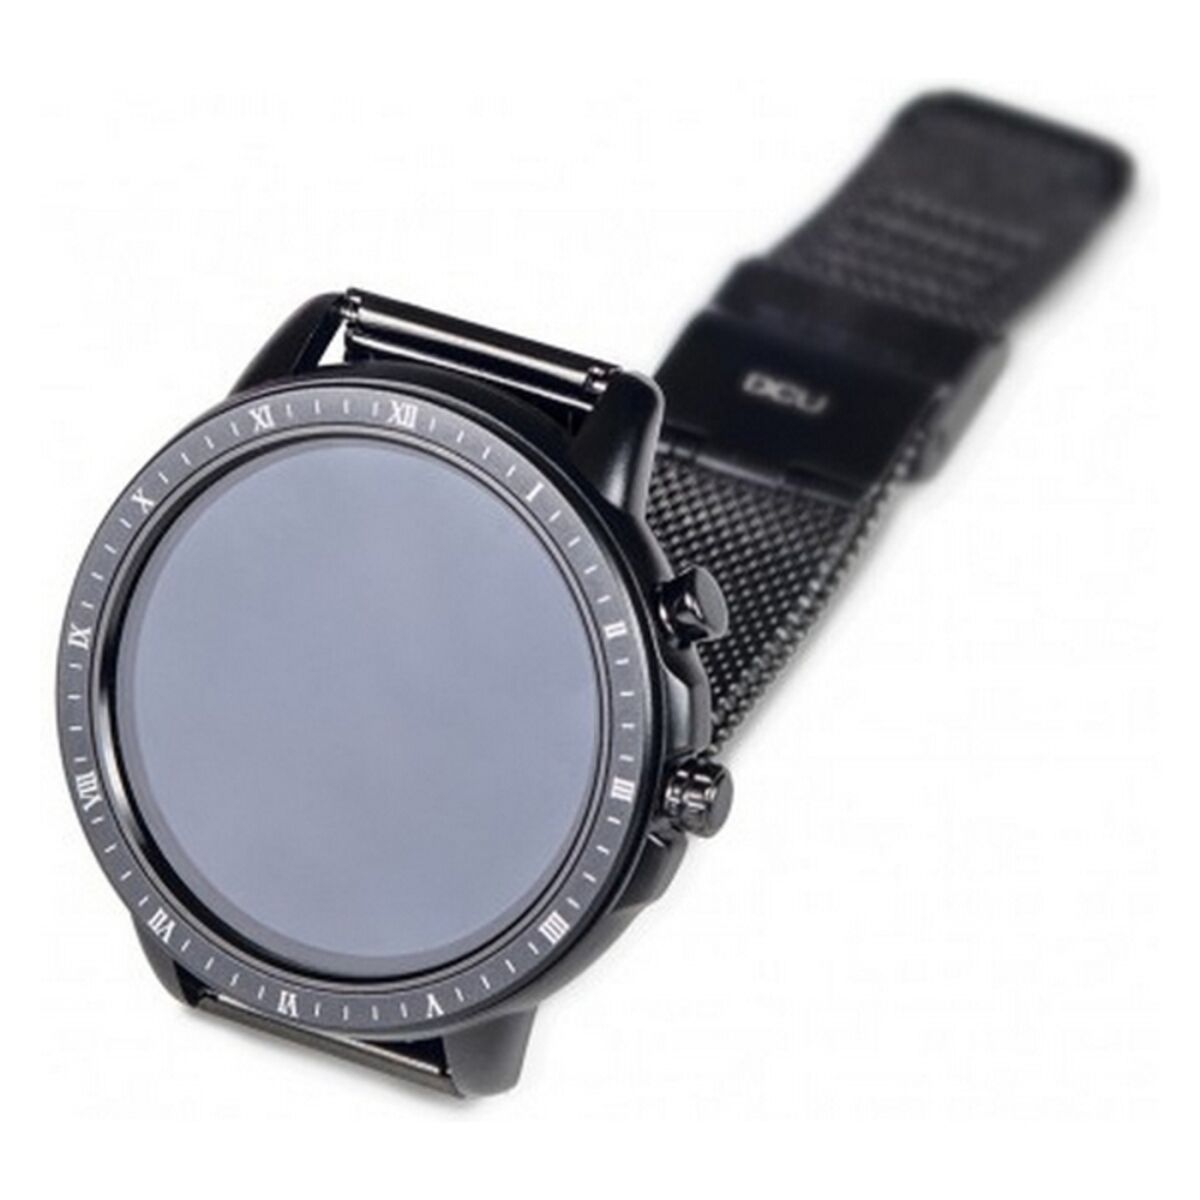 Kaufe Smartwatch DCU 34157055 1,3" IP67 Schwarz bei AWK Flagship um € 87.00